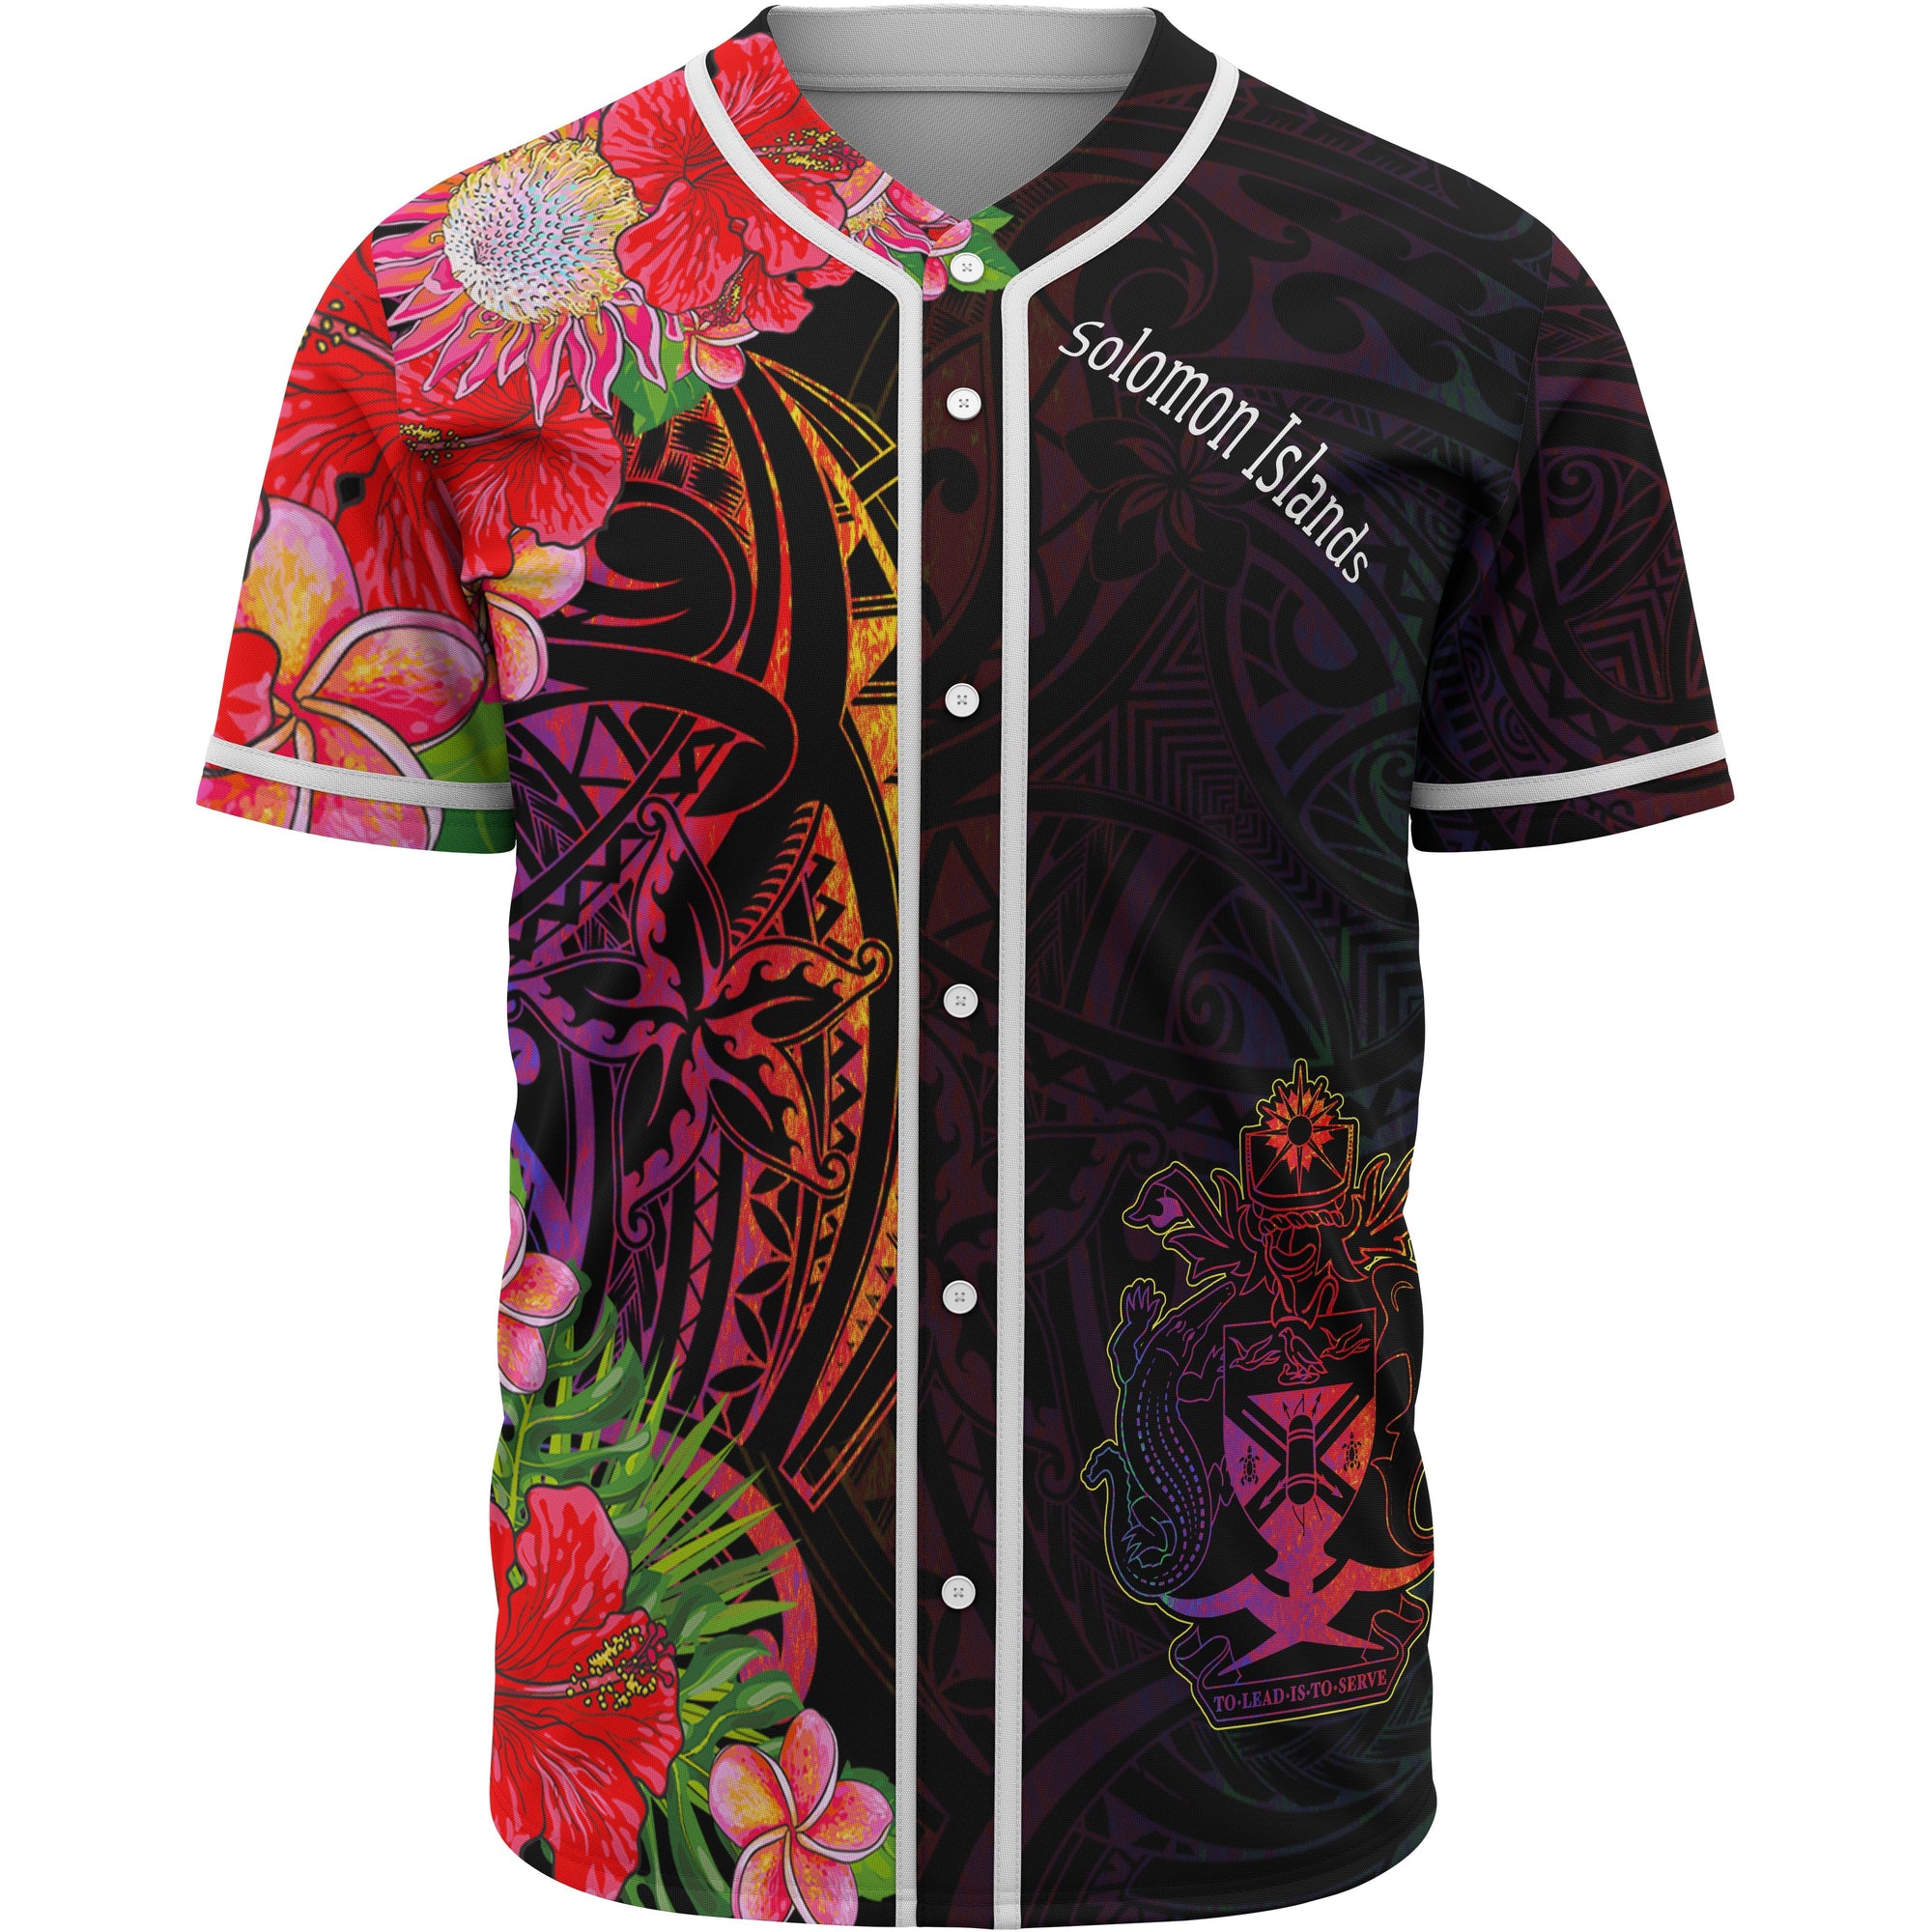 Solomon Islands Baseball Shirt - Tropical Hippie Style Unisex Black - Polynesian Pride